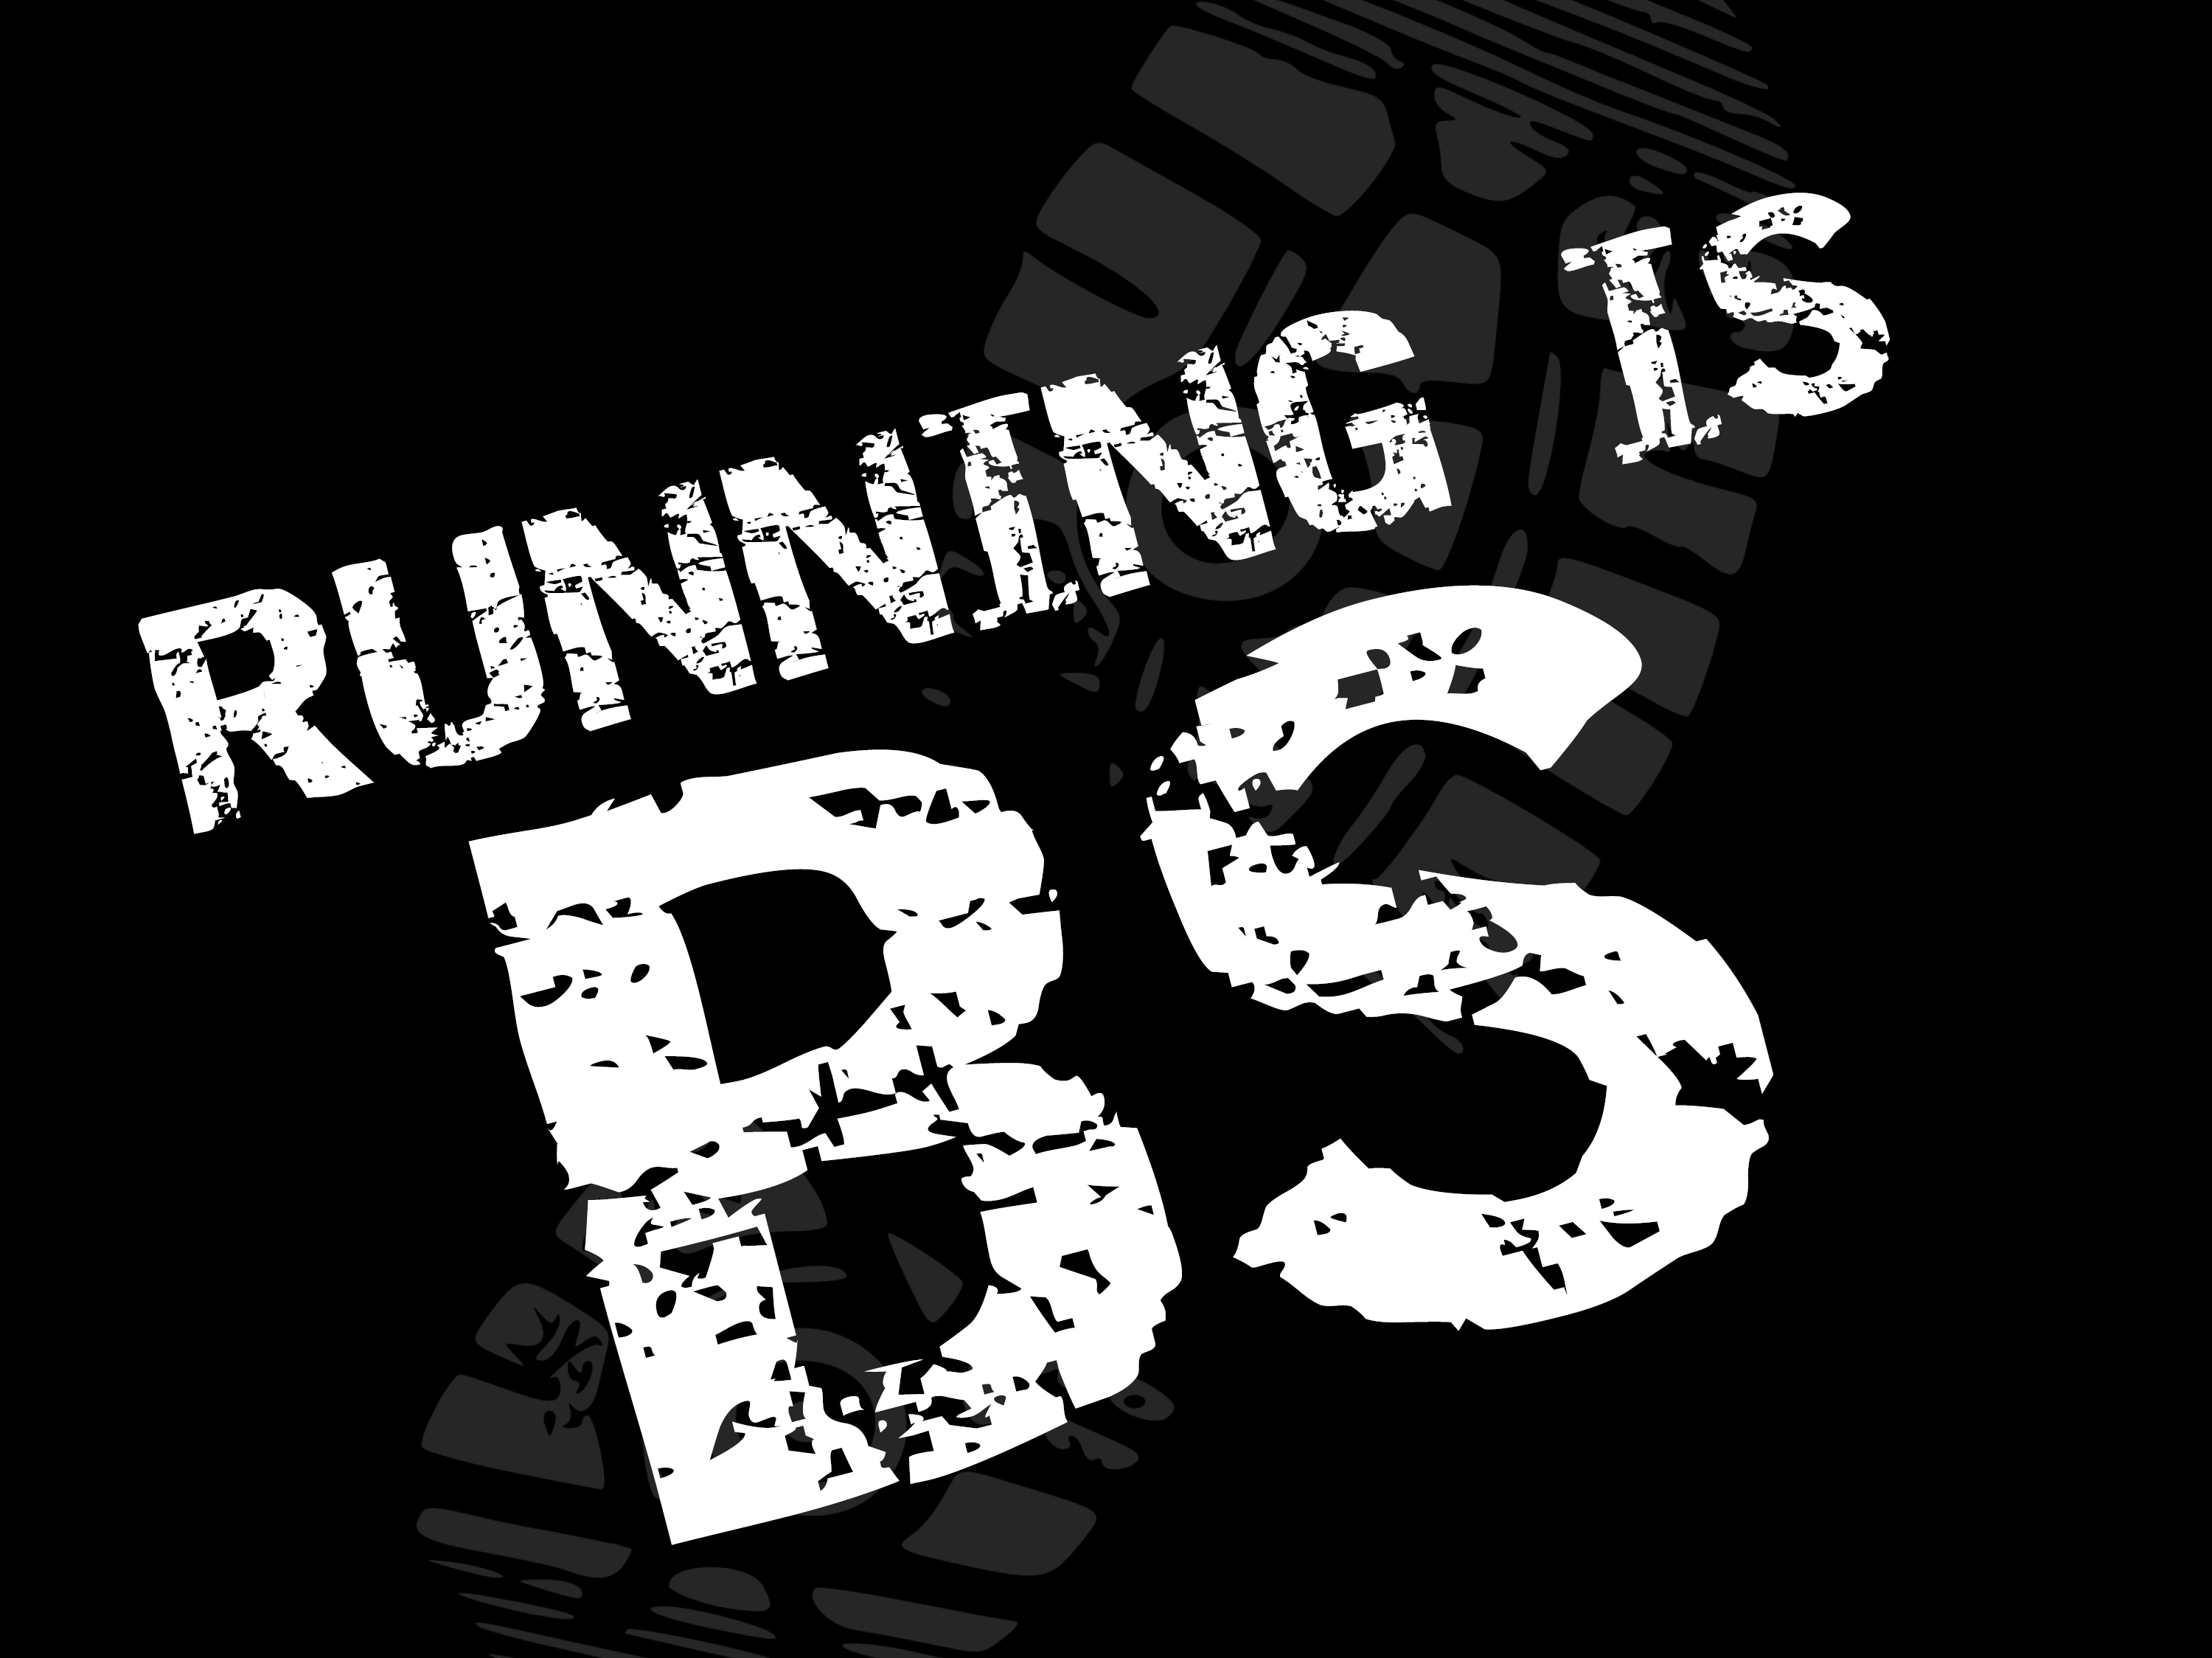 Running is BS